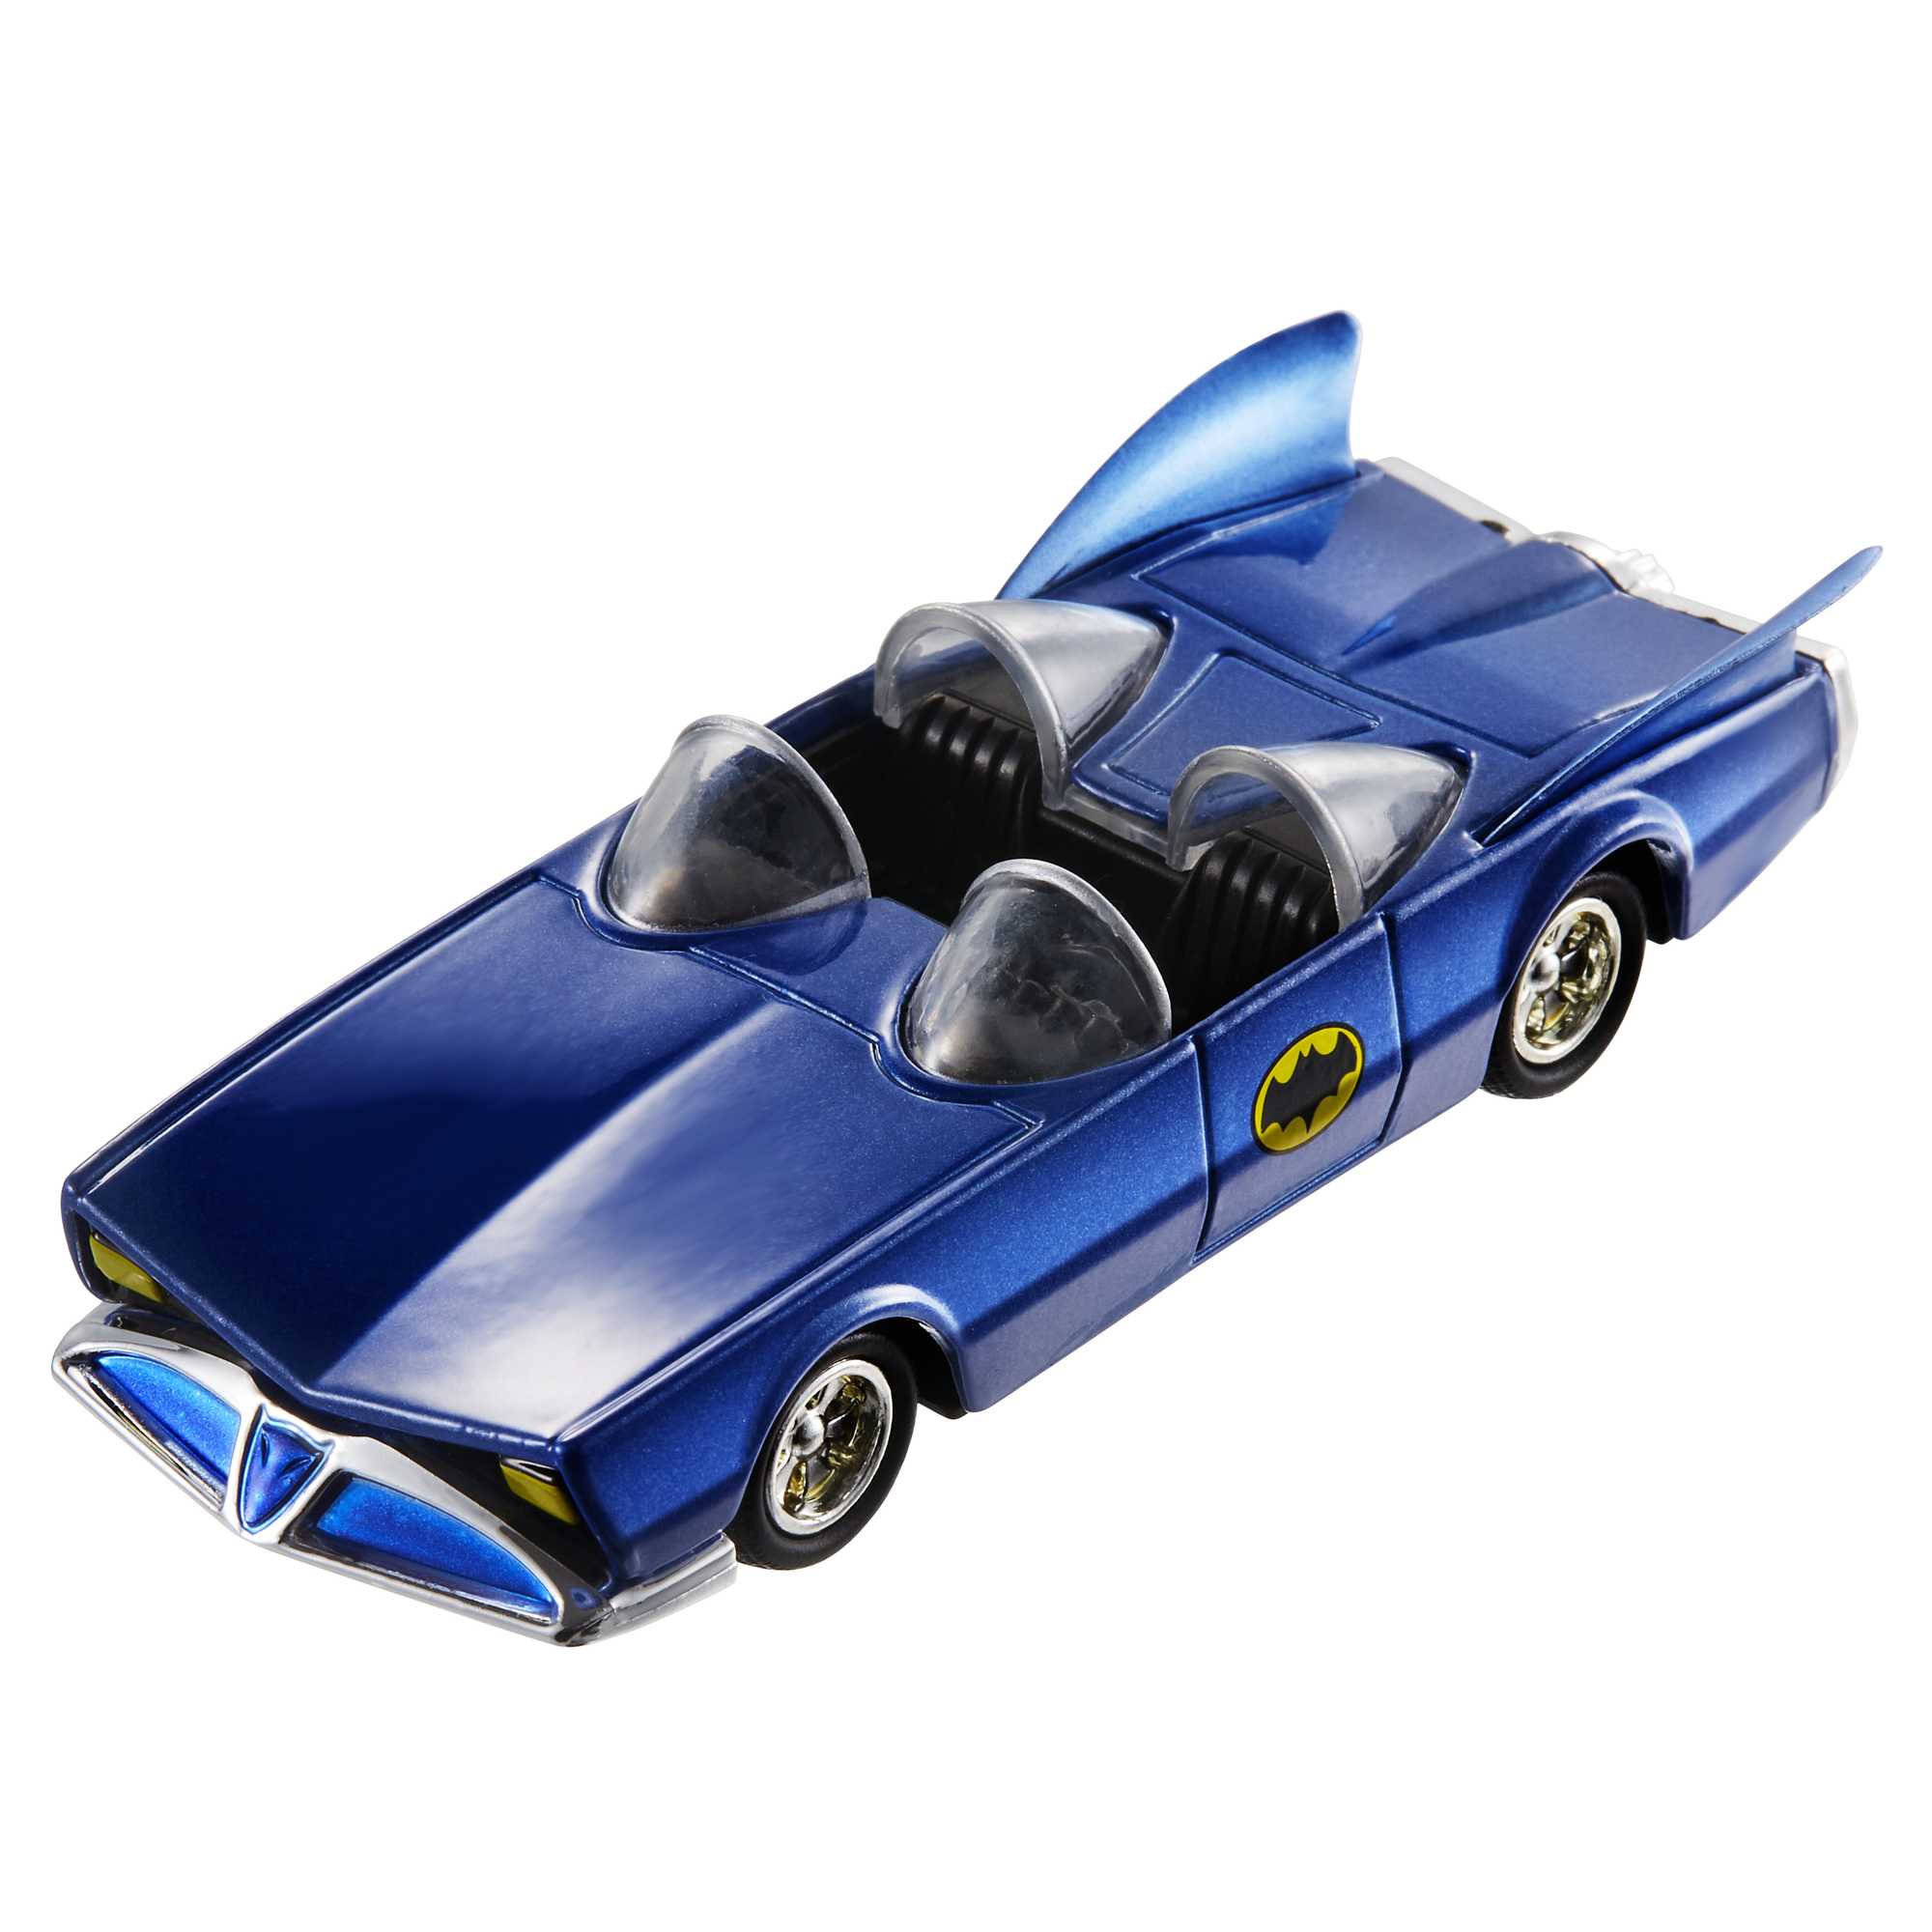 Hot Wheels Batman Assortment Vehicles |Mattel